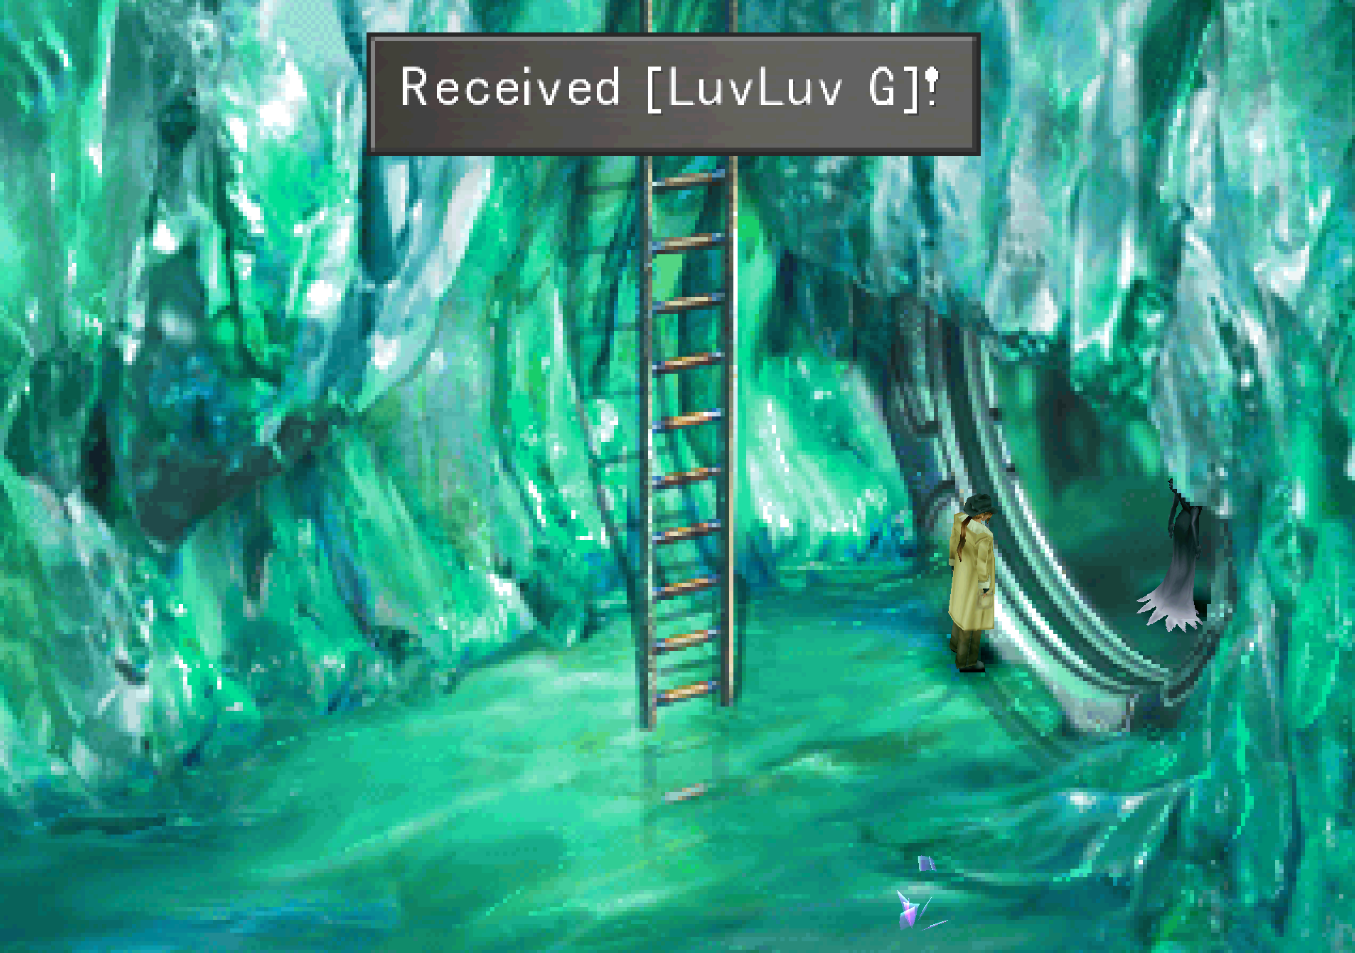 LuvLuv G Item Received